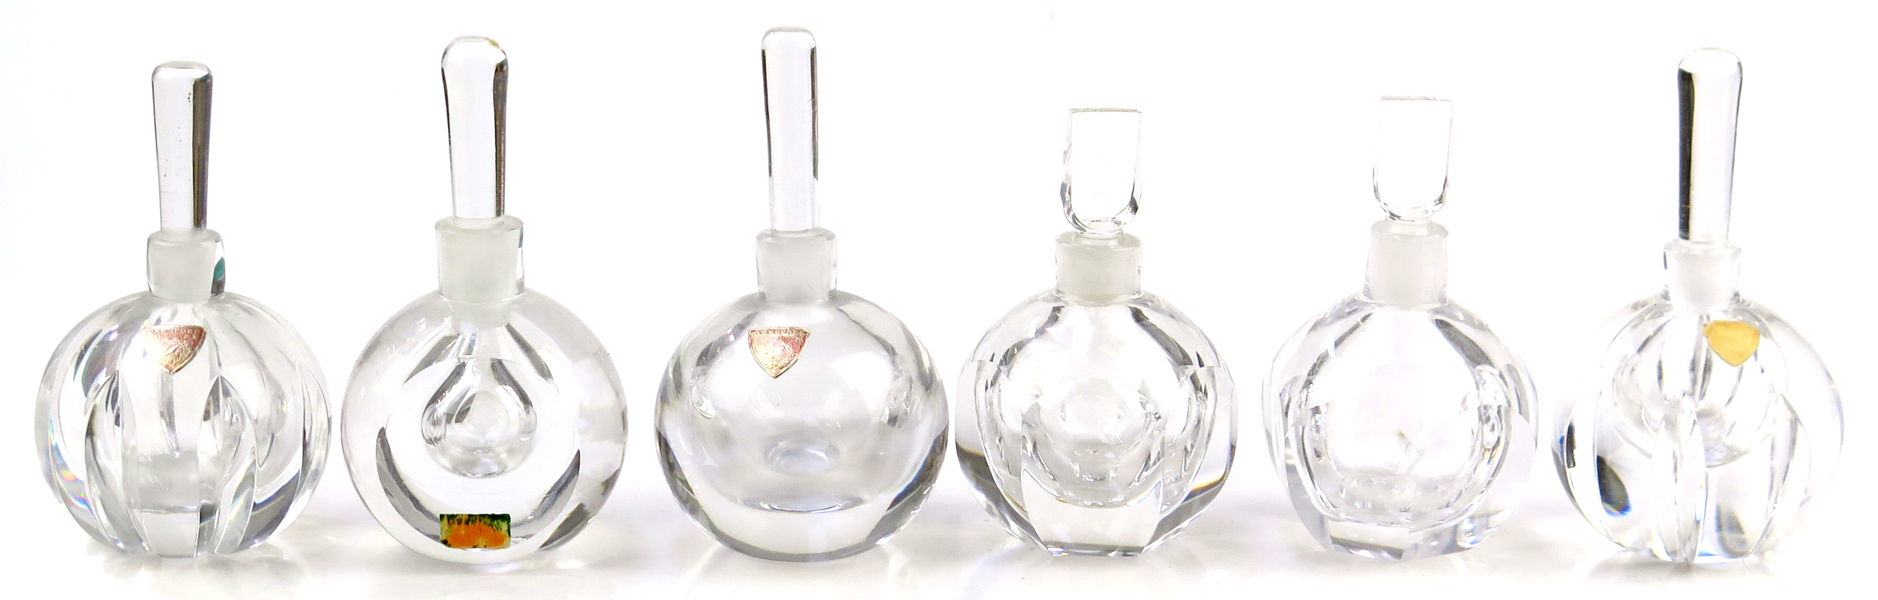 Hald, Edward för Orrefors, parfymflaconer med proppar, 6 st, glas, _19644a_lg.jpeg